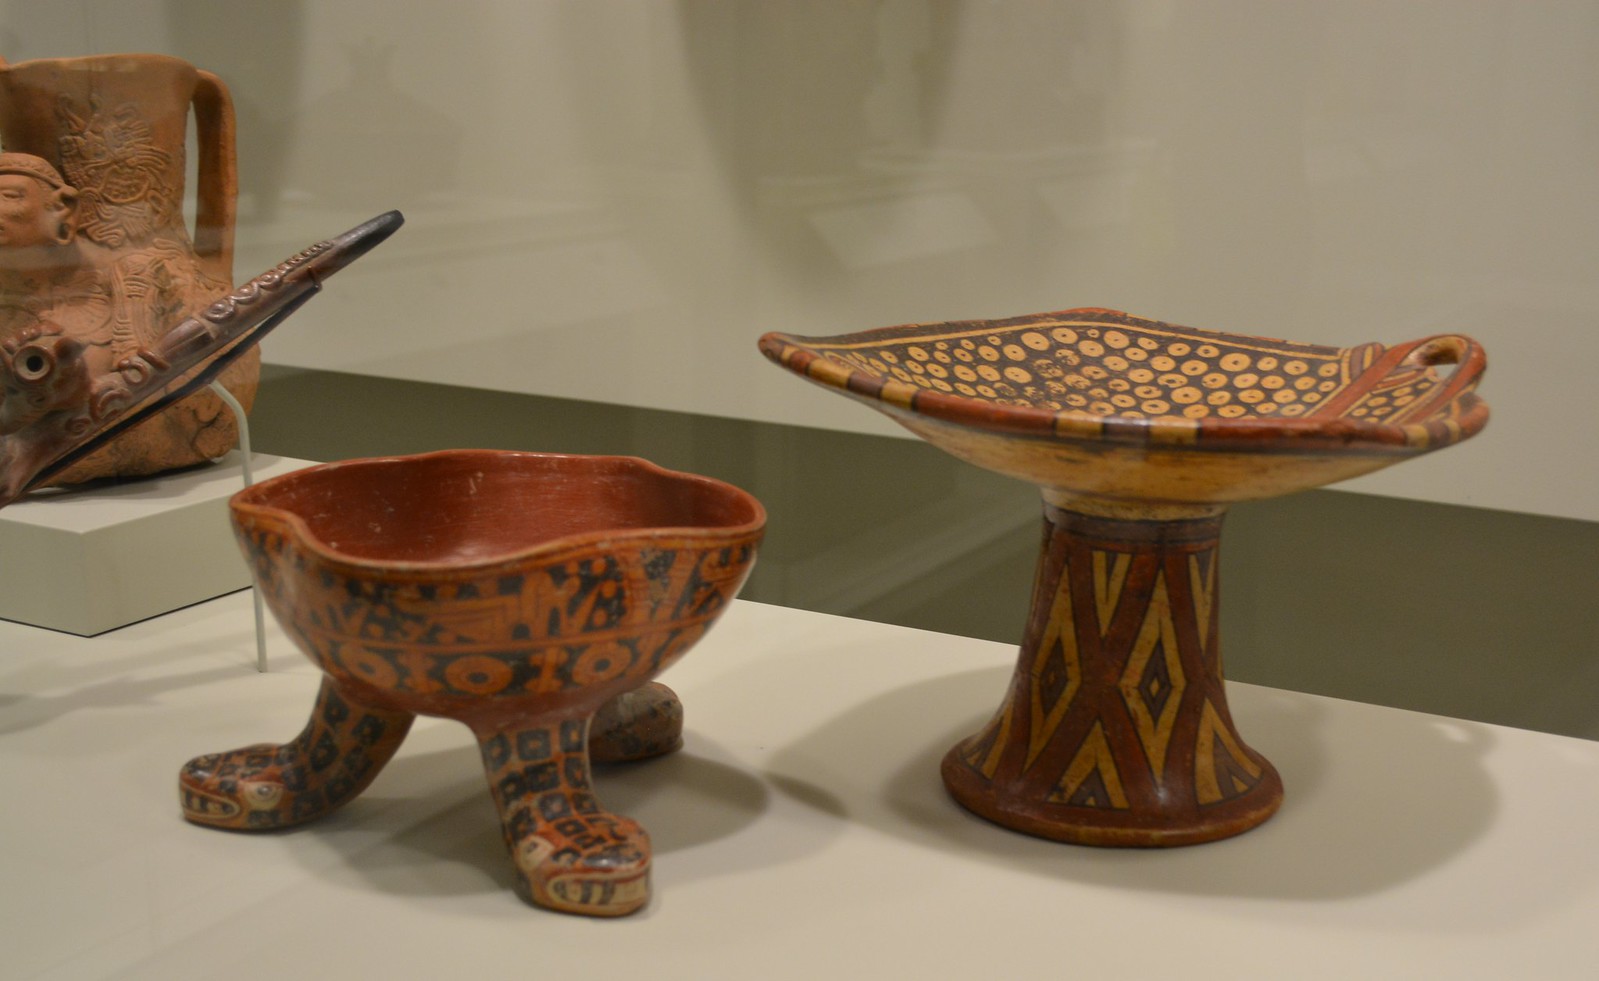 Analizan simbolismo de cerámica hallada en ofrenda prehispánica cholulteca